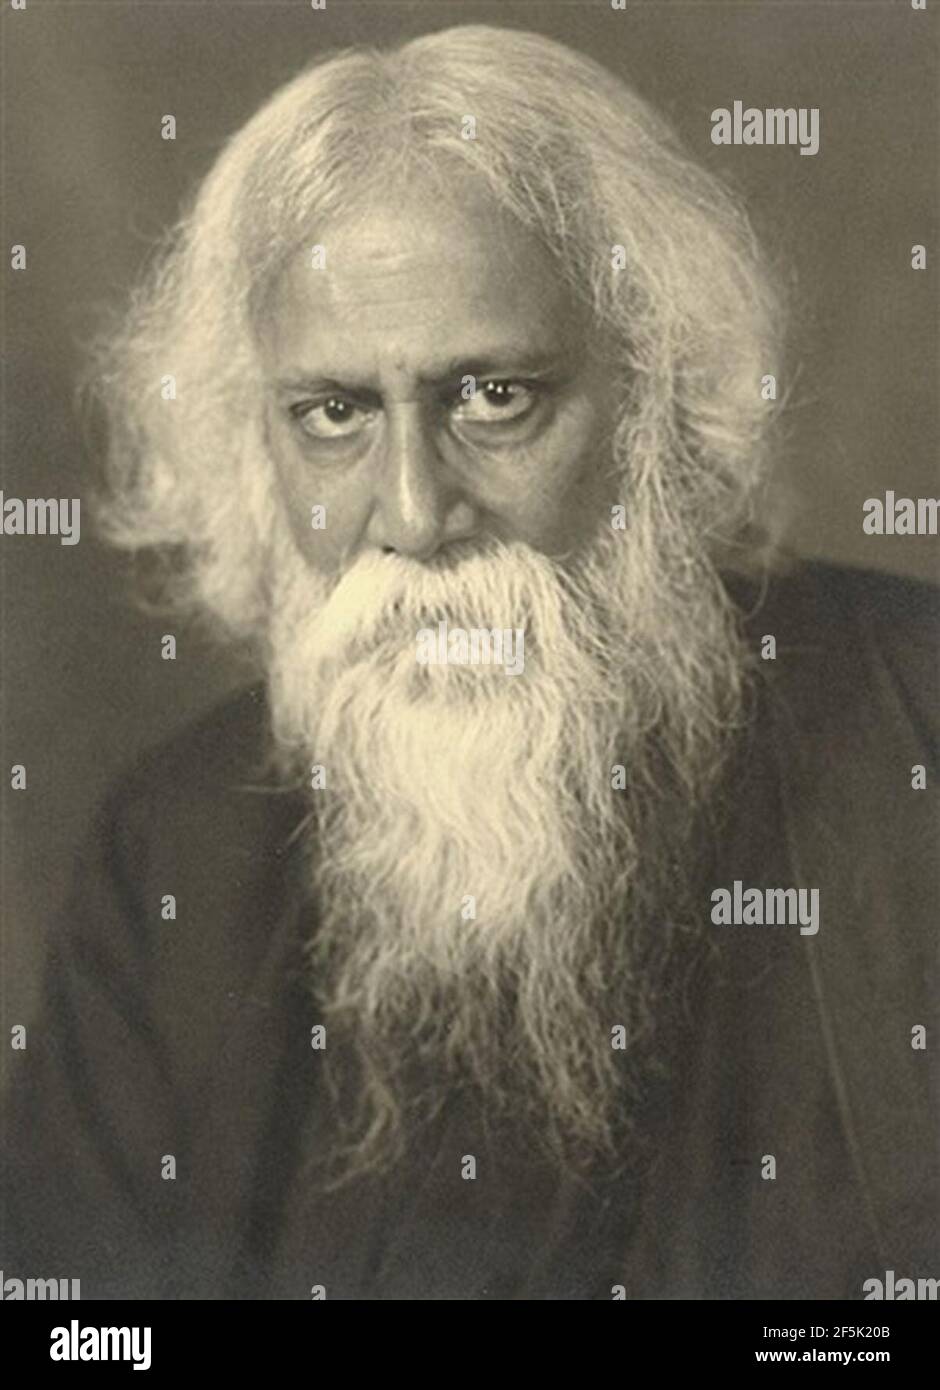 Rabindranath Tagore by Hugo Erfurth Stock Photo - Alamy